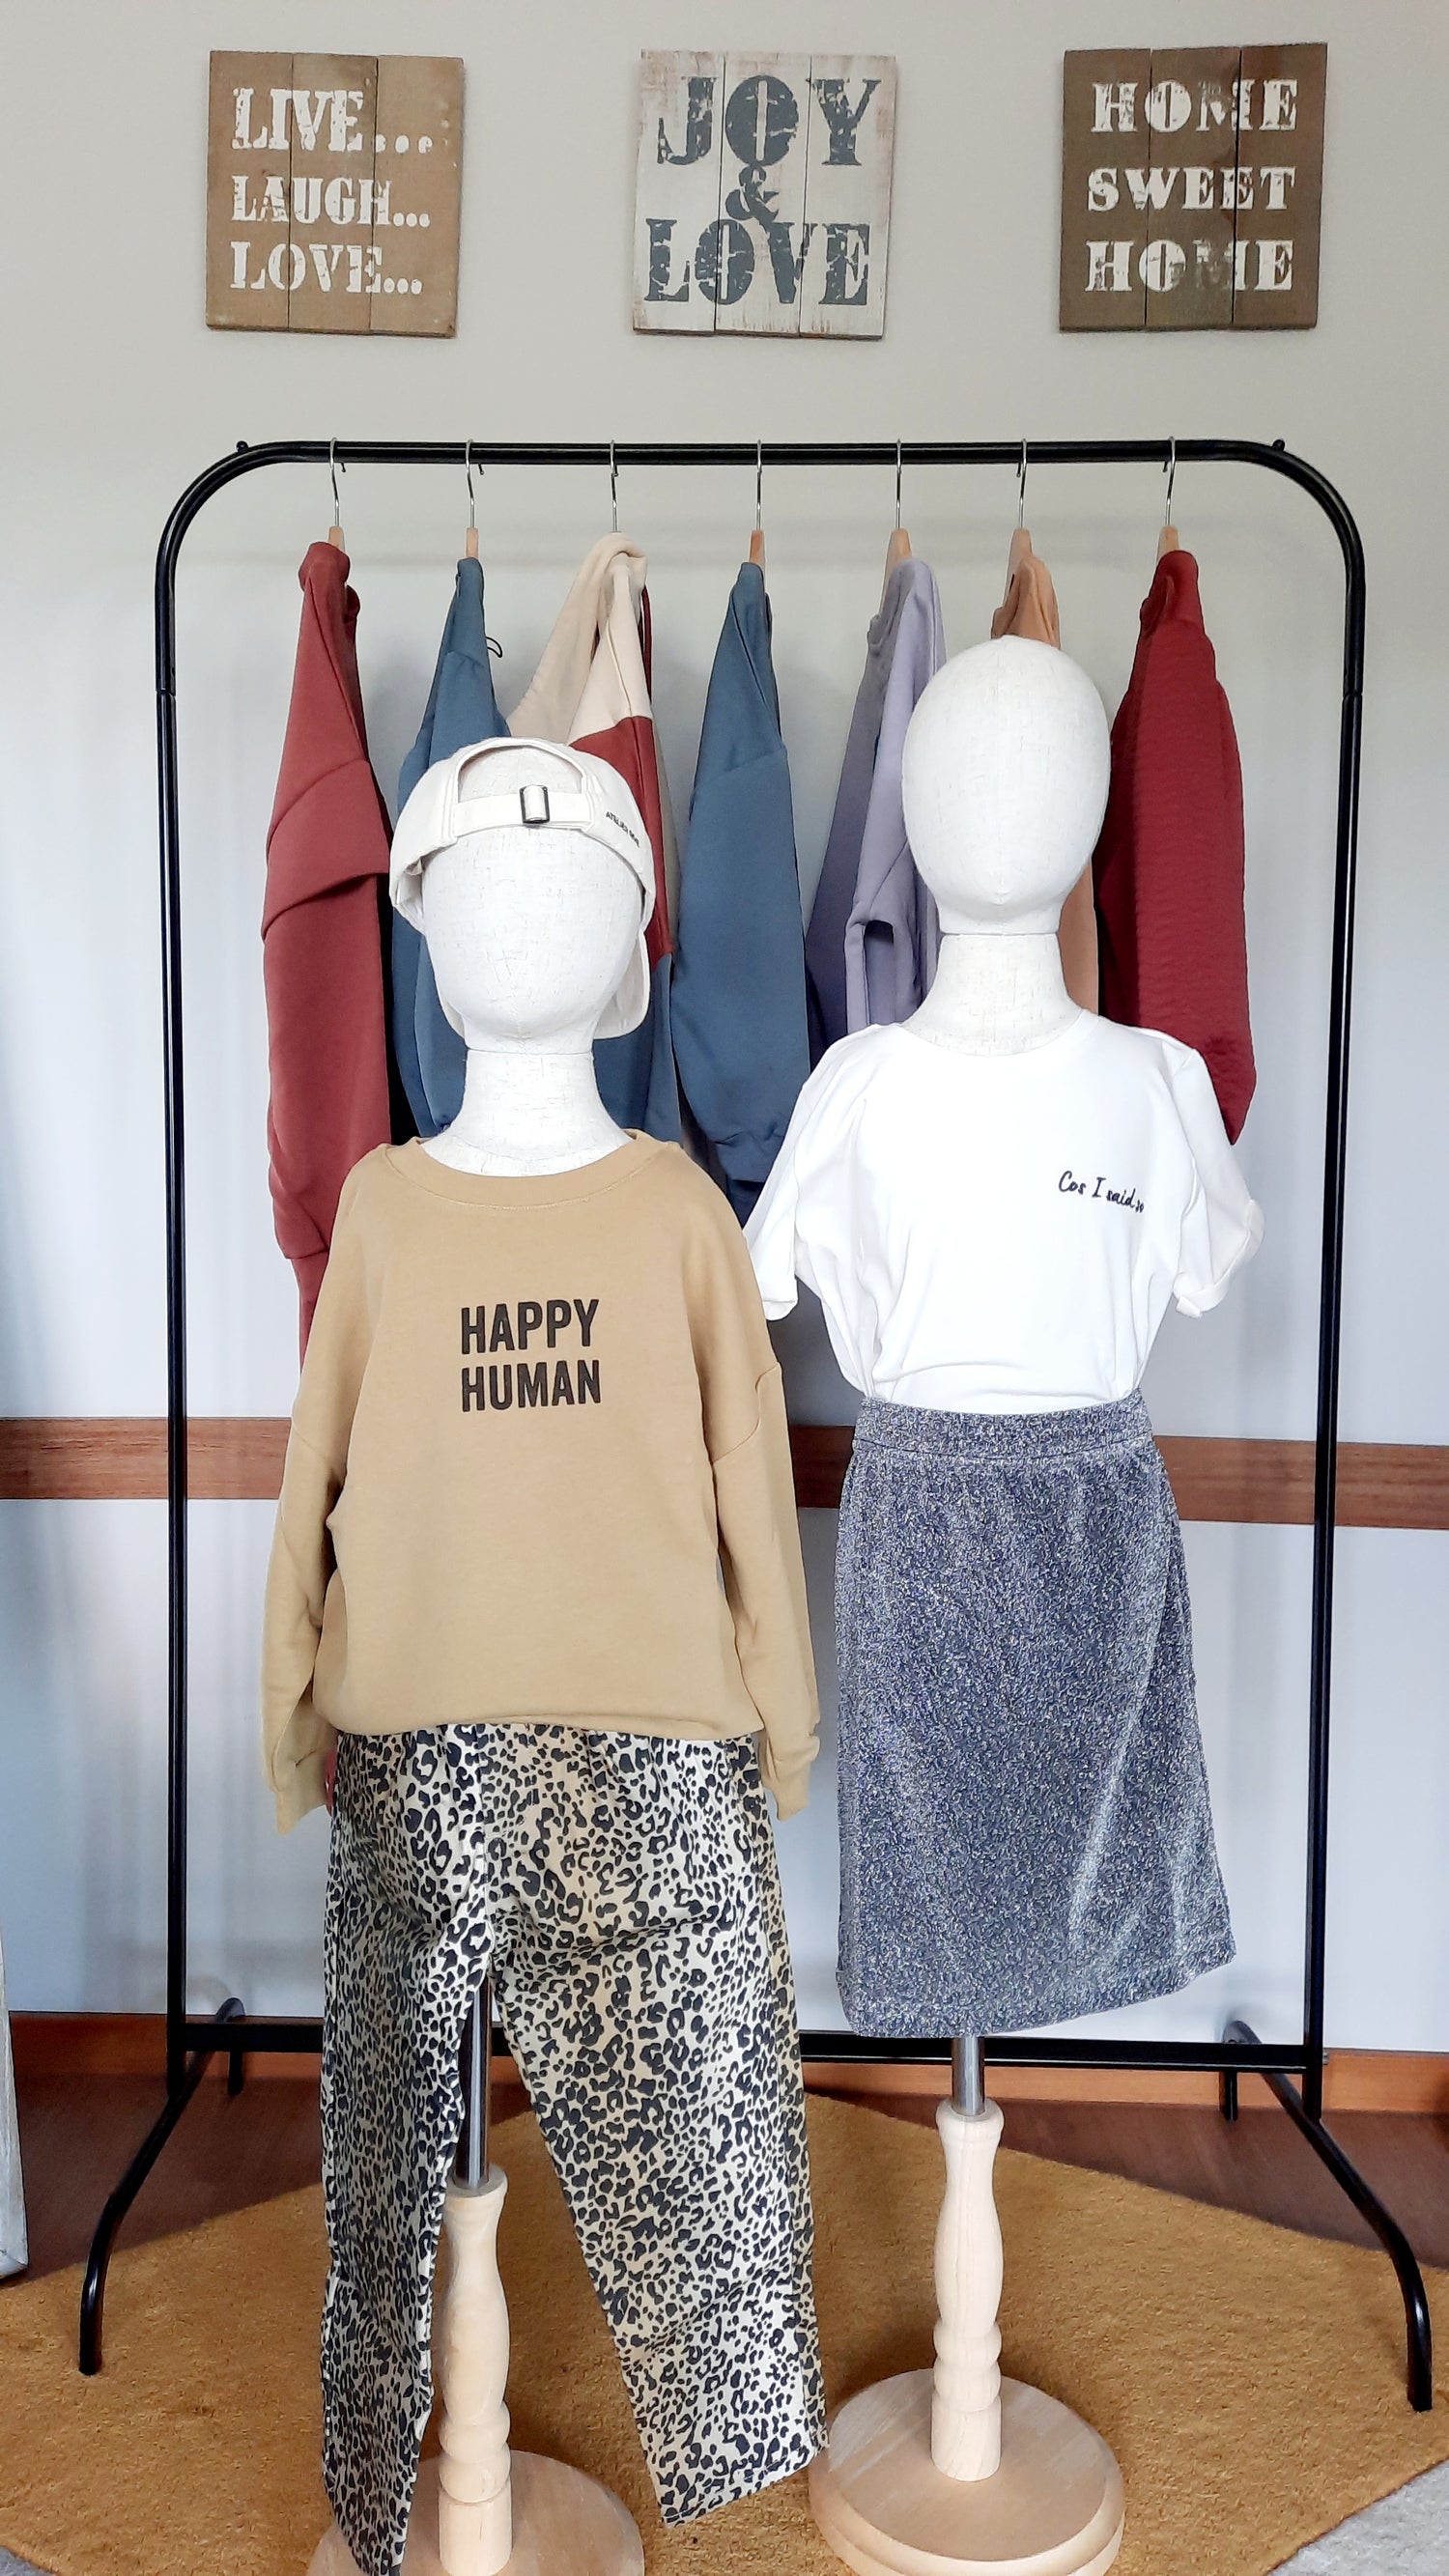 Nachhaltiges Sweatshirt - Happy Human